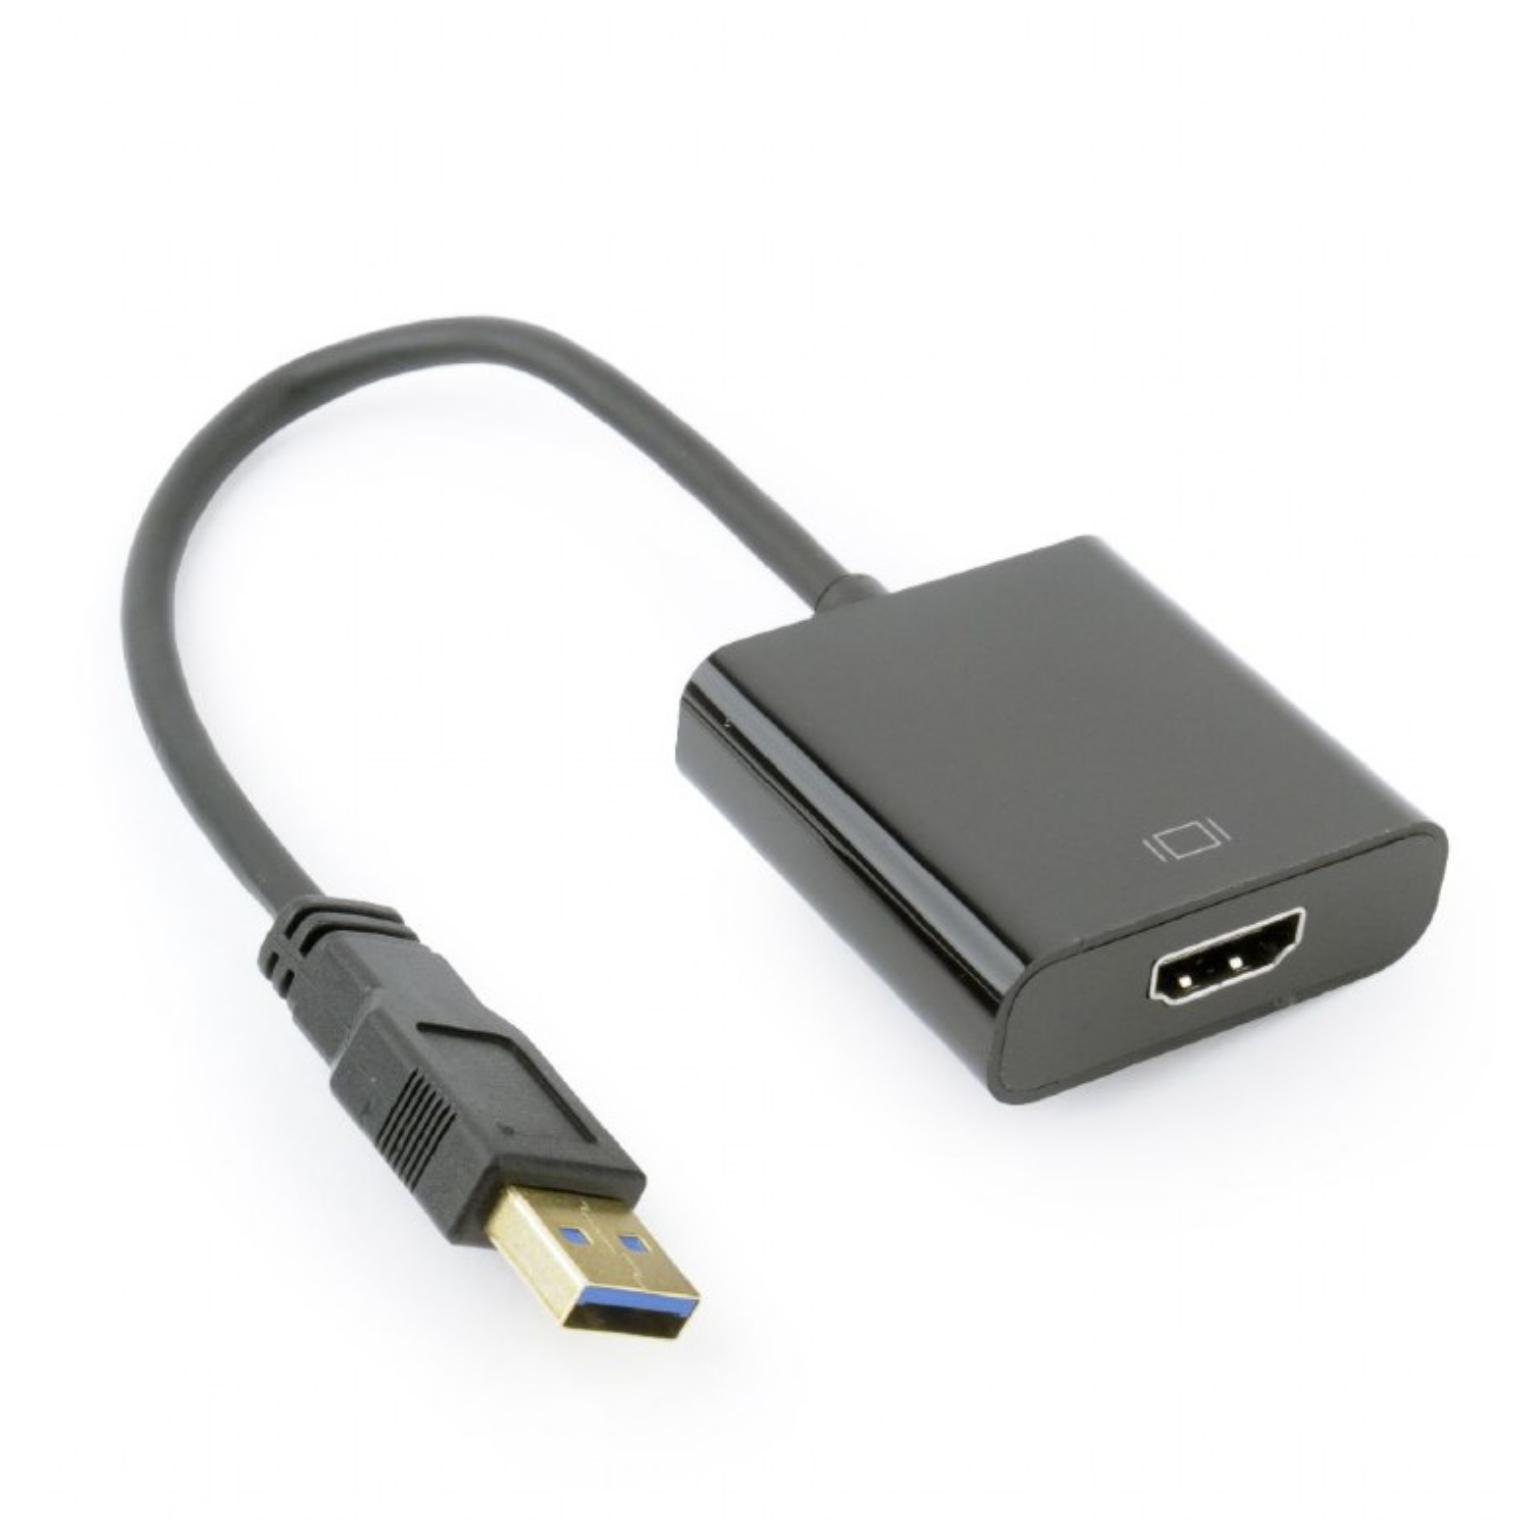 leef ermee calcium hulp in de huishouding USB A naar HDMI omvormer - Aansluiting 1: USB A male Aansluiting 2: HDMI  female Max. resolutie: Full HD@60Hz